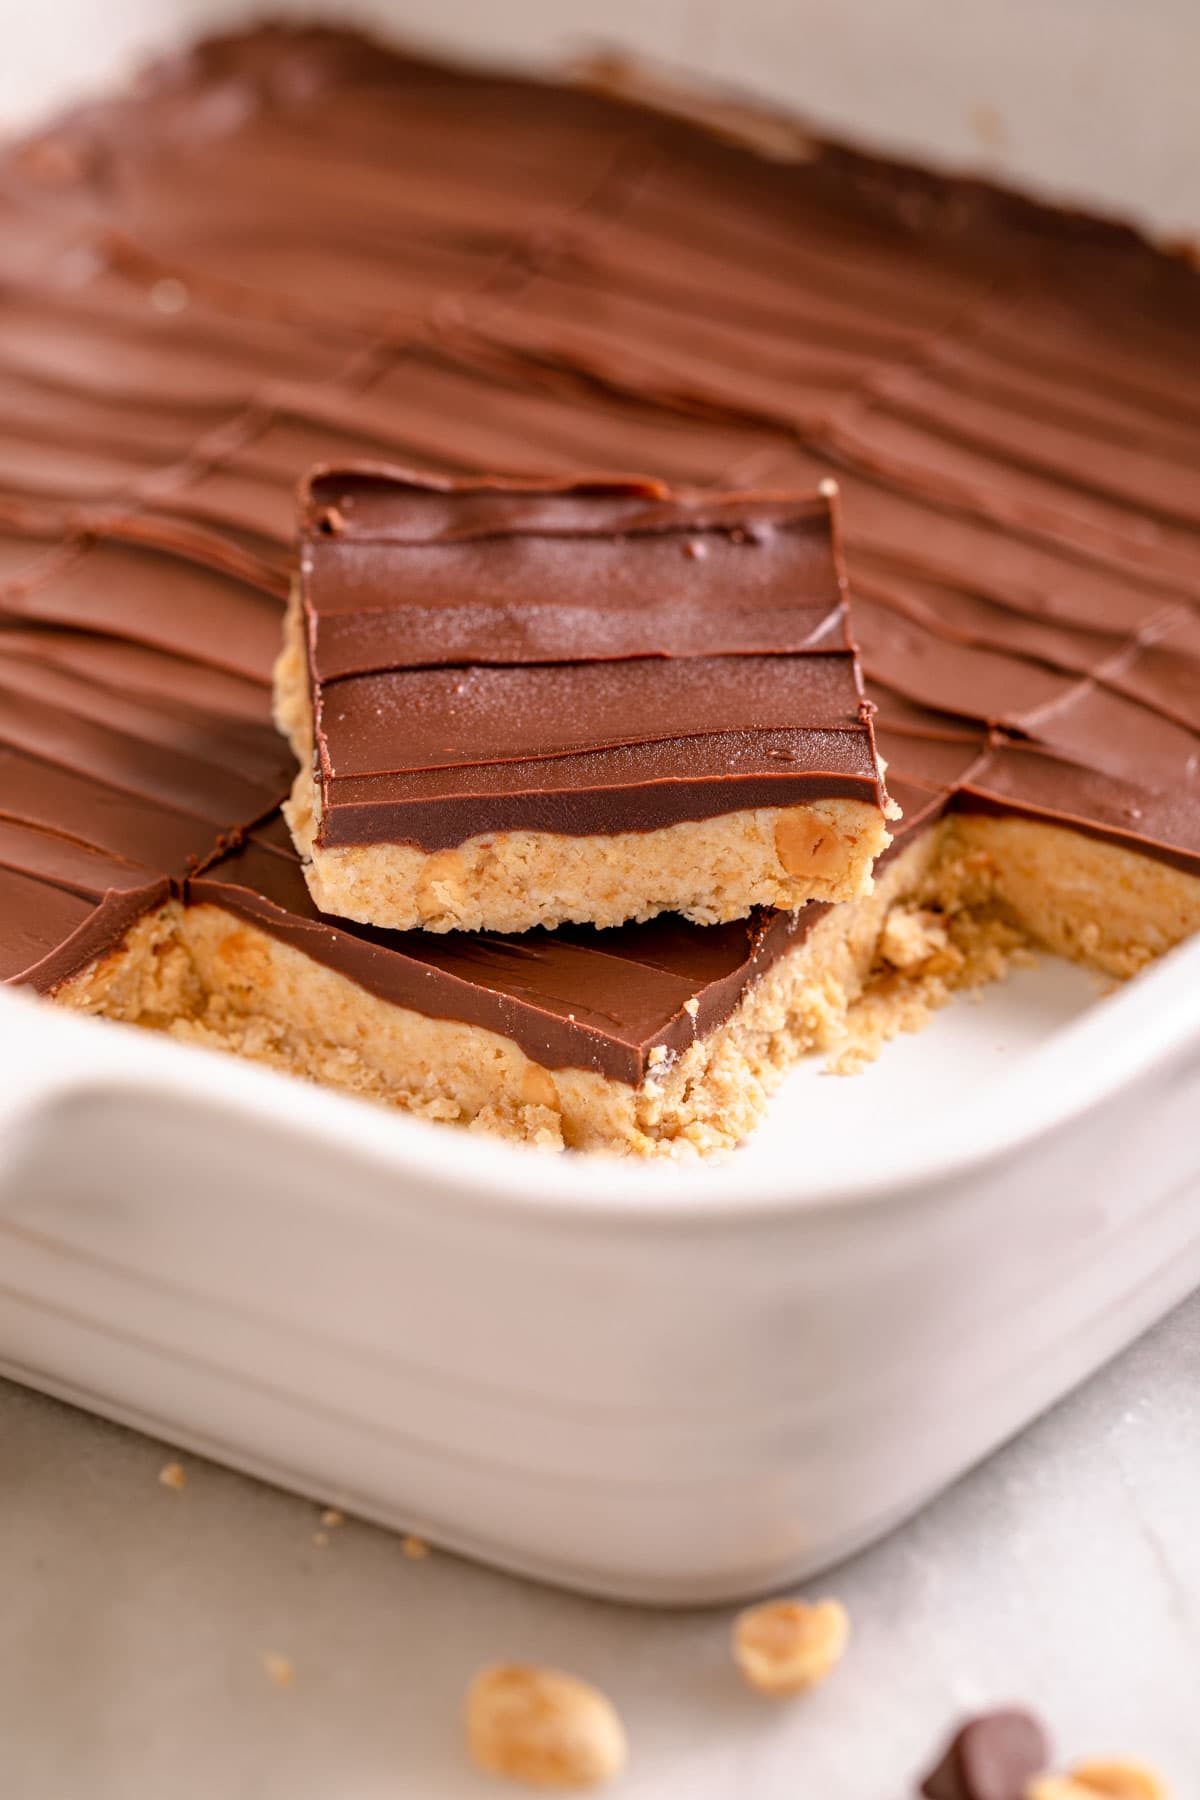 Chocolate Peanut Butter Bars cut in baking dish